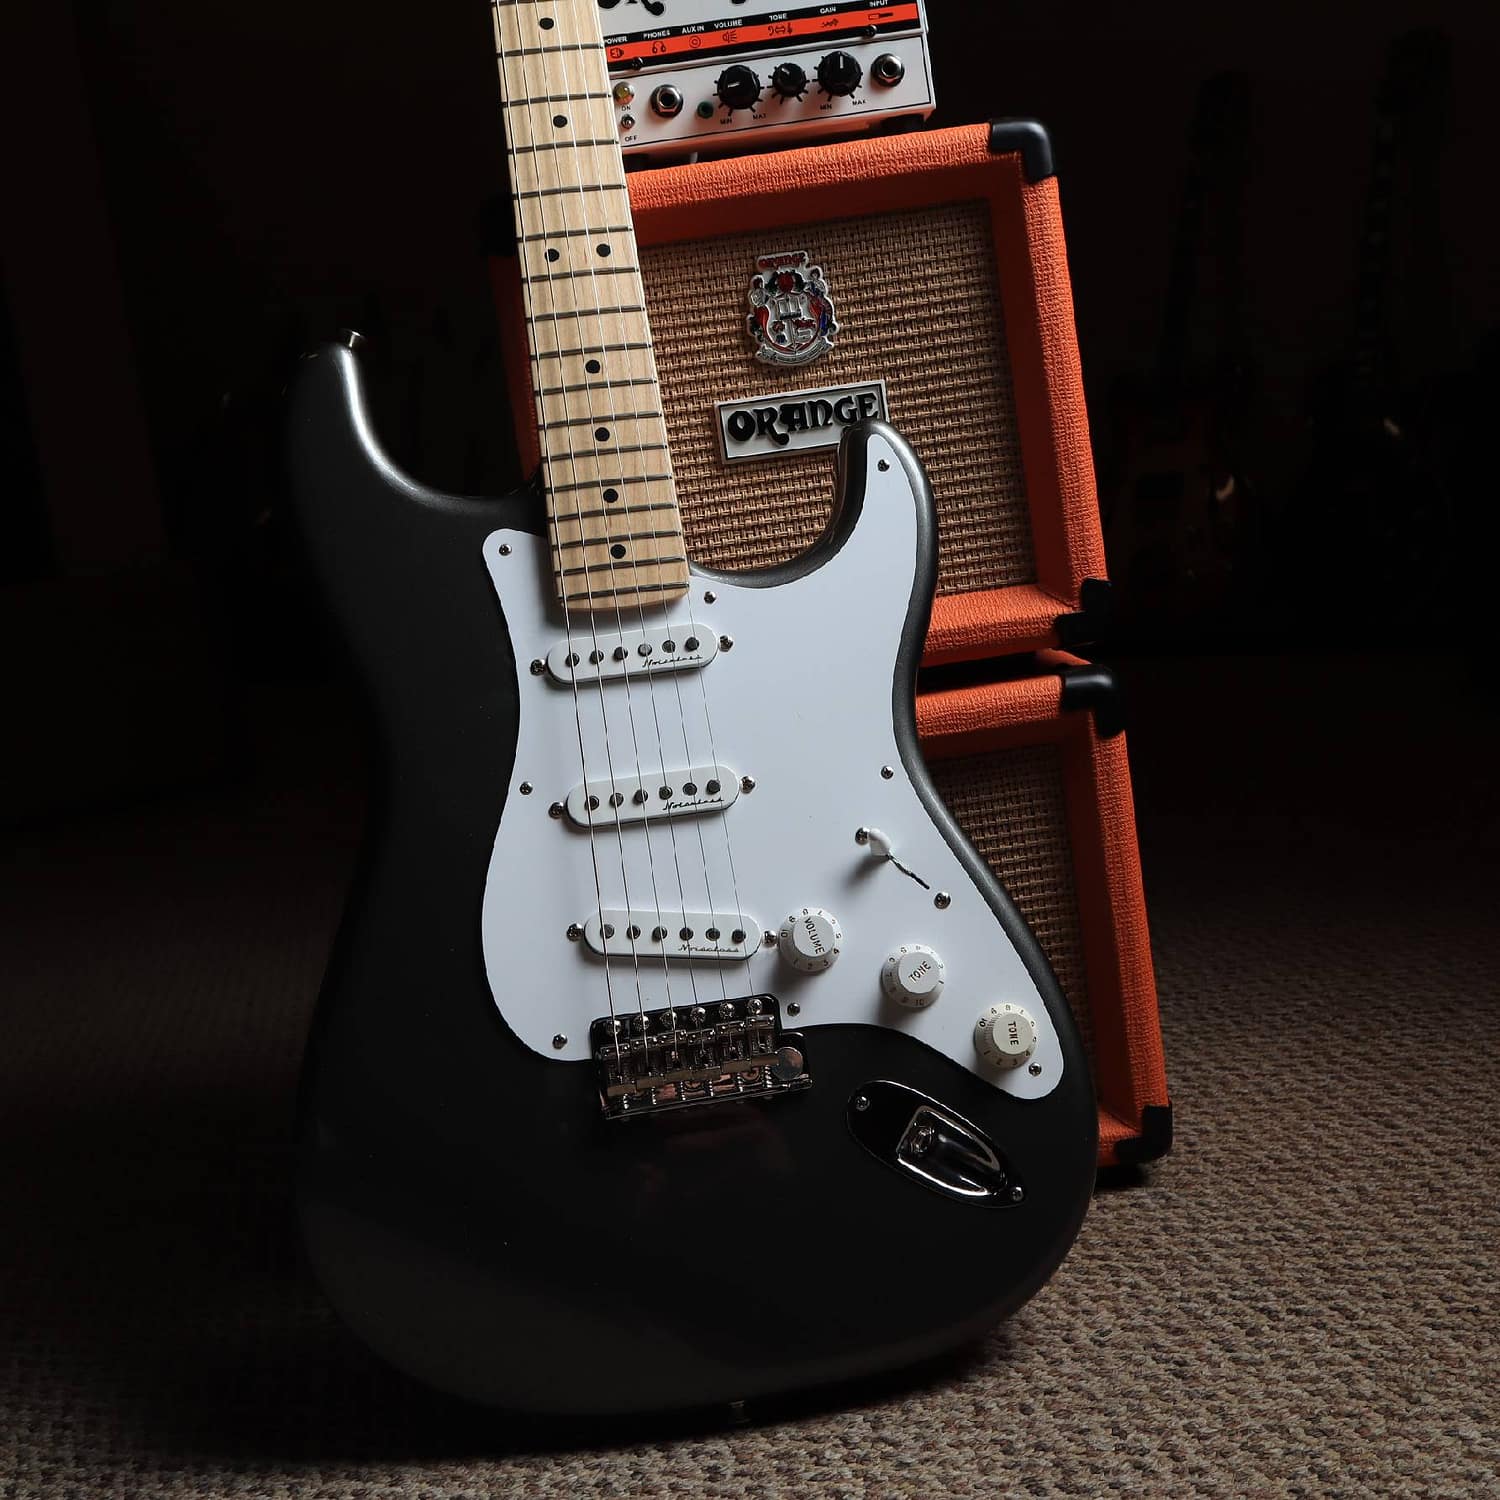 Fender-Eric-Clapton-Guitar-With-Orange-Amplifier